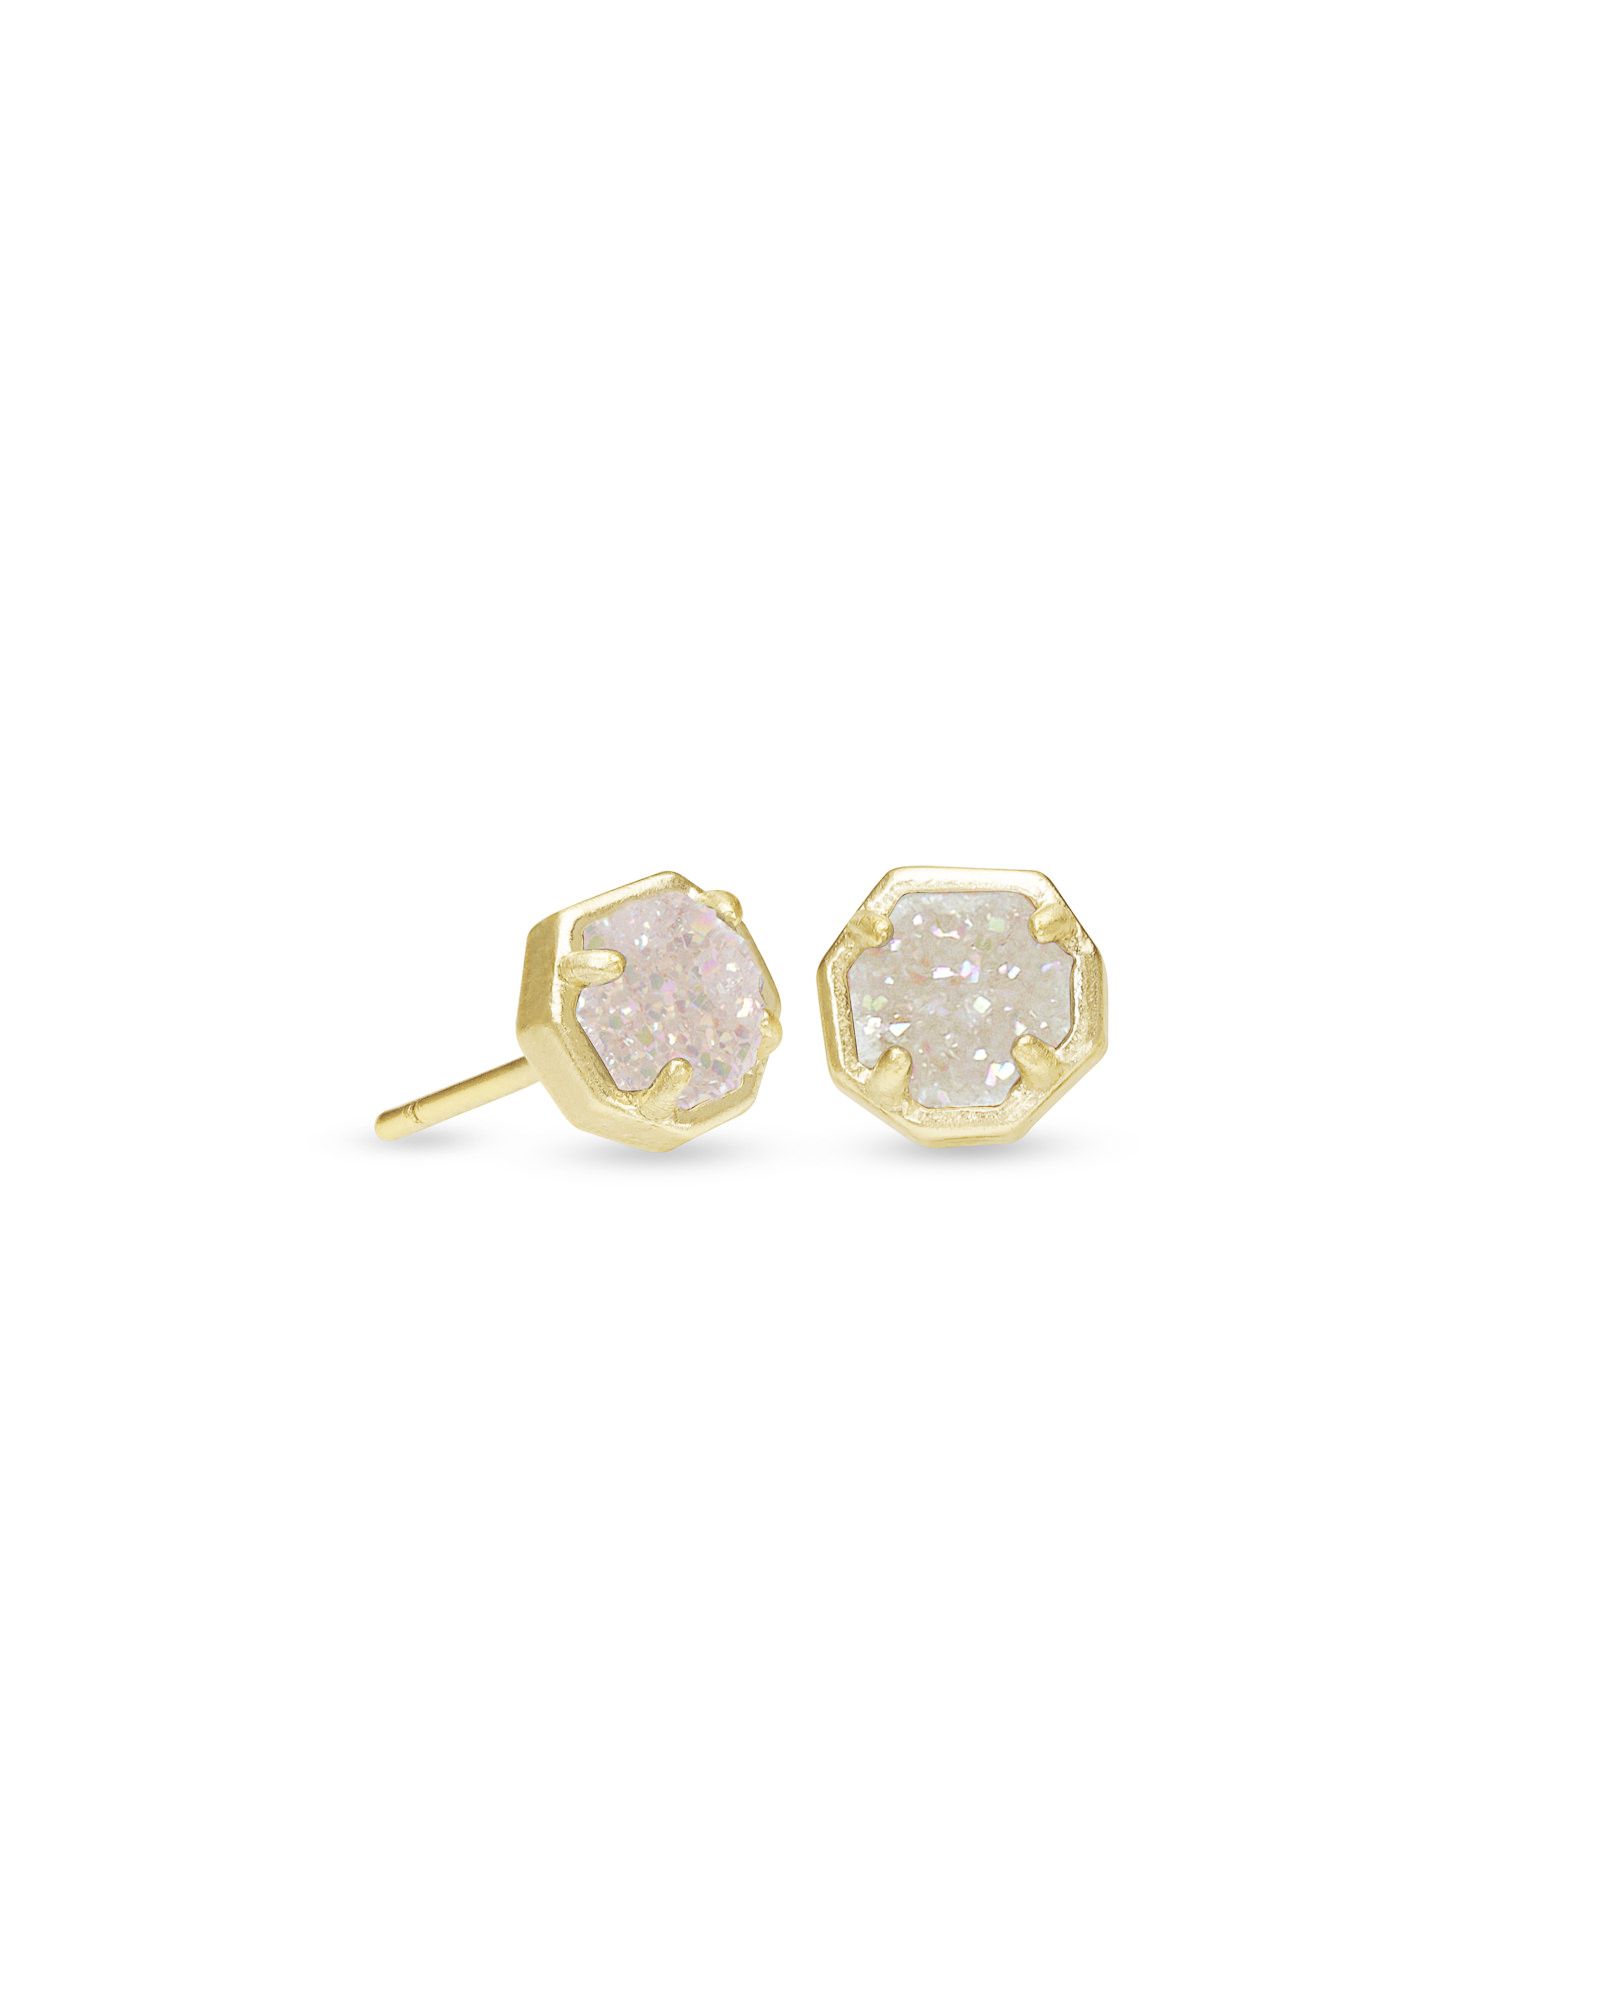 Nola Gold Stud Earrings in Iridescent Drusy | Kendra Scott | Kendra Scott